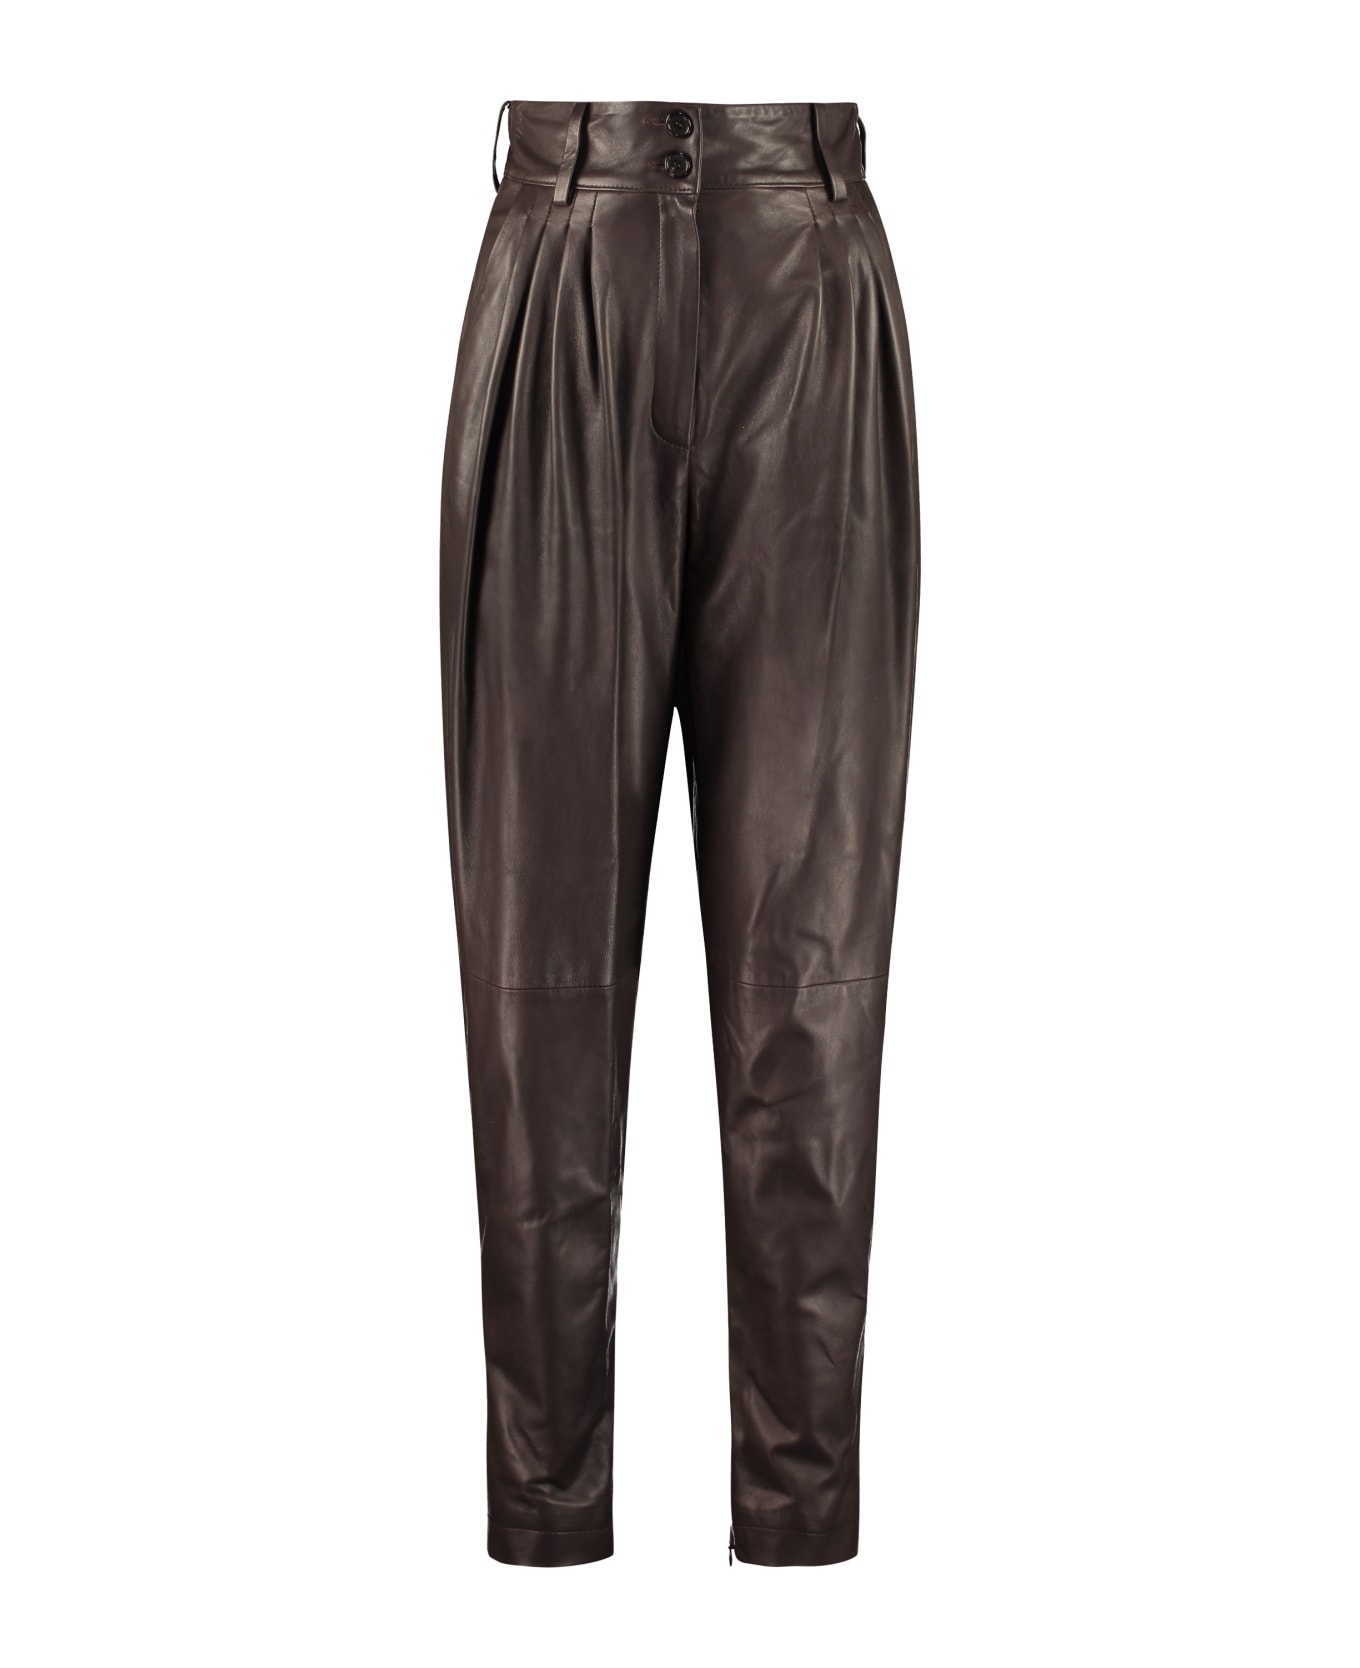 Dolce & Gabbana Leather Pants - brown